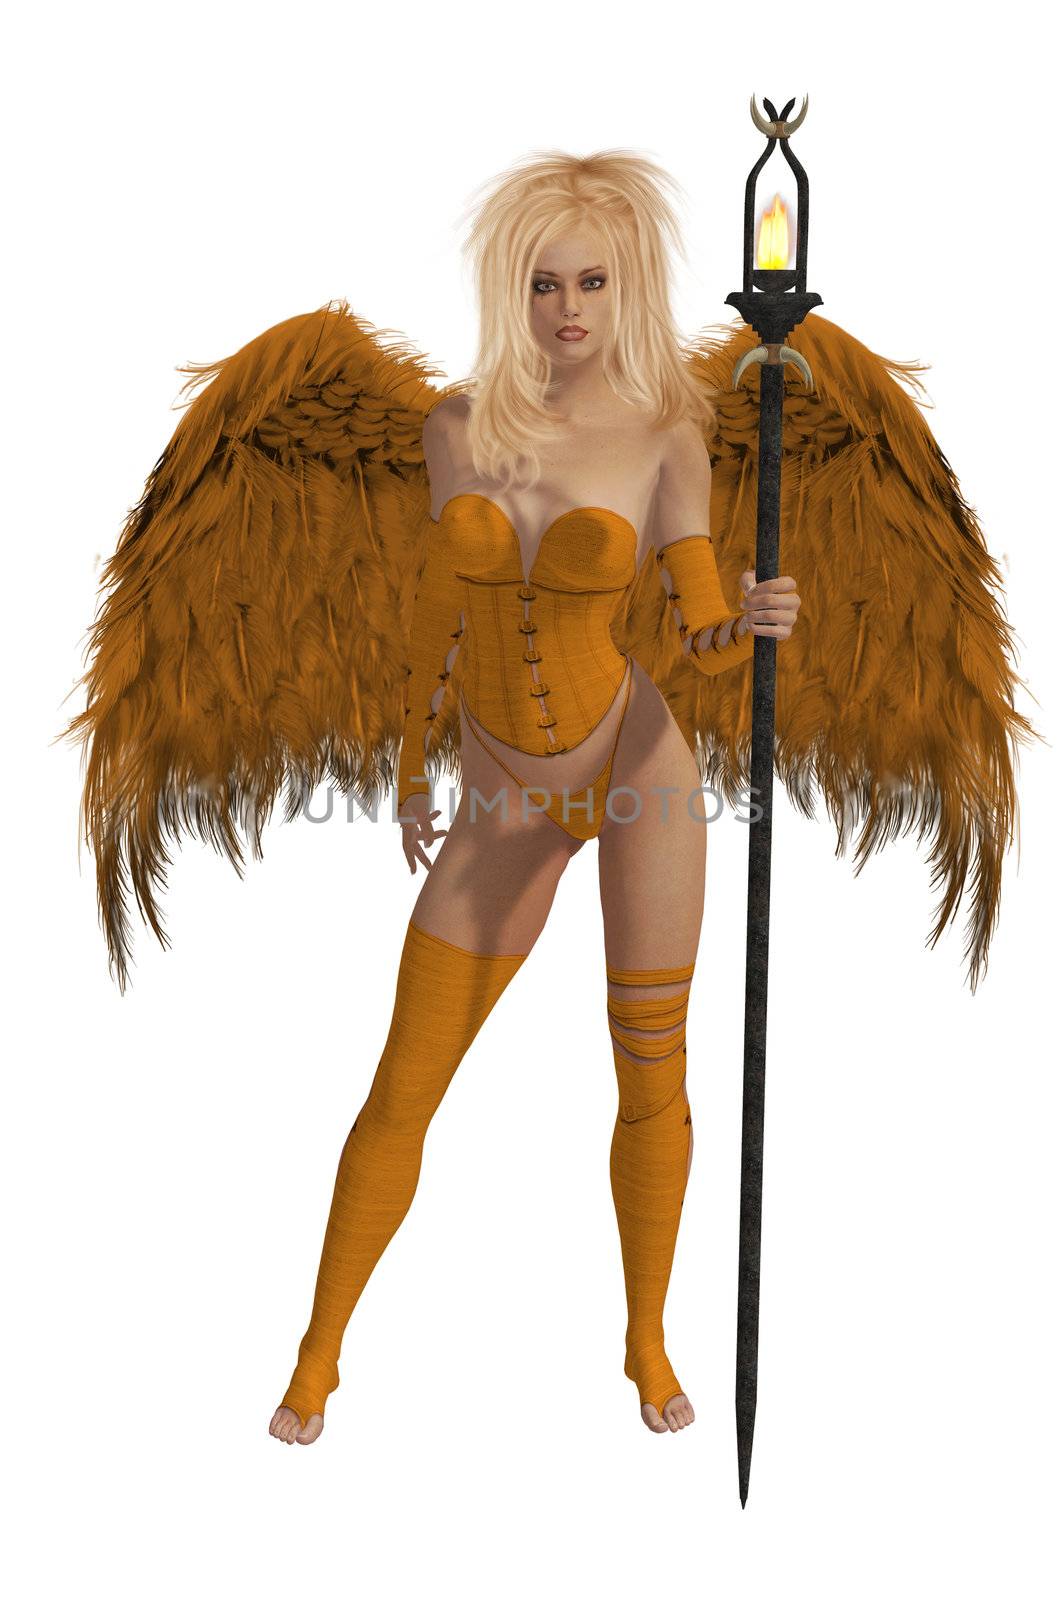 Orange Winged Angel With Blonde Hair by kathygold